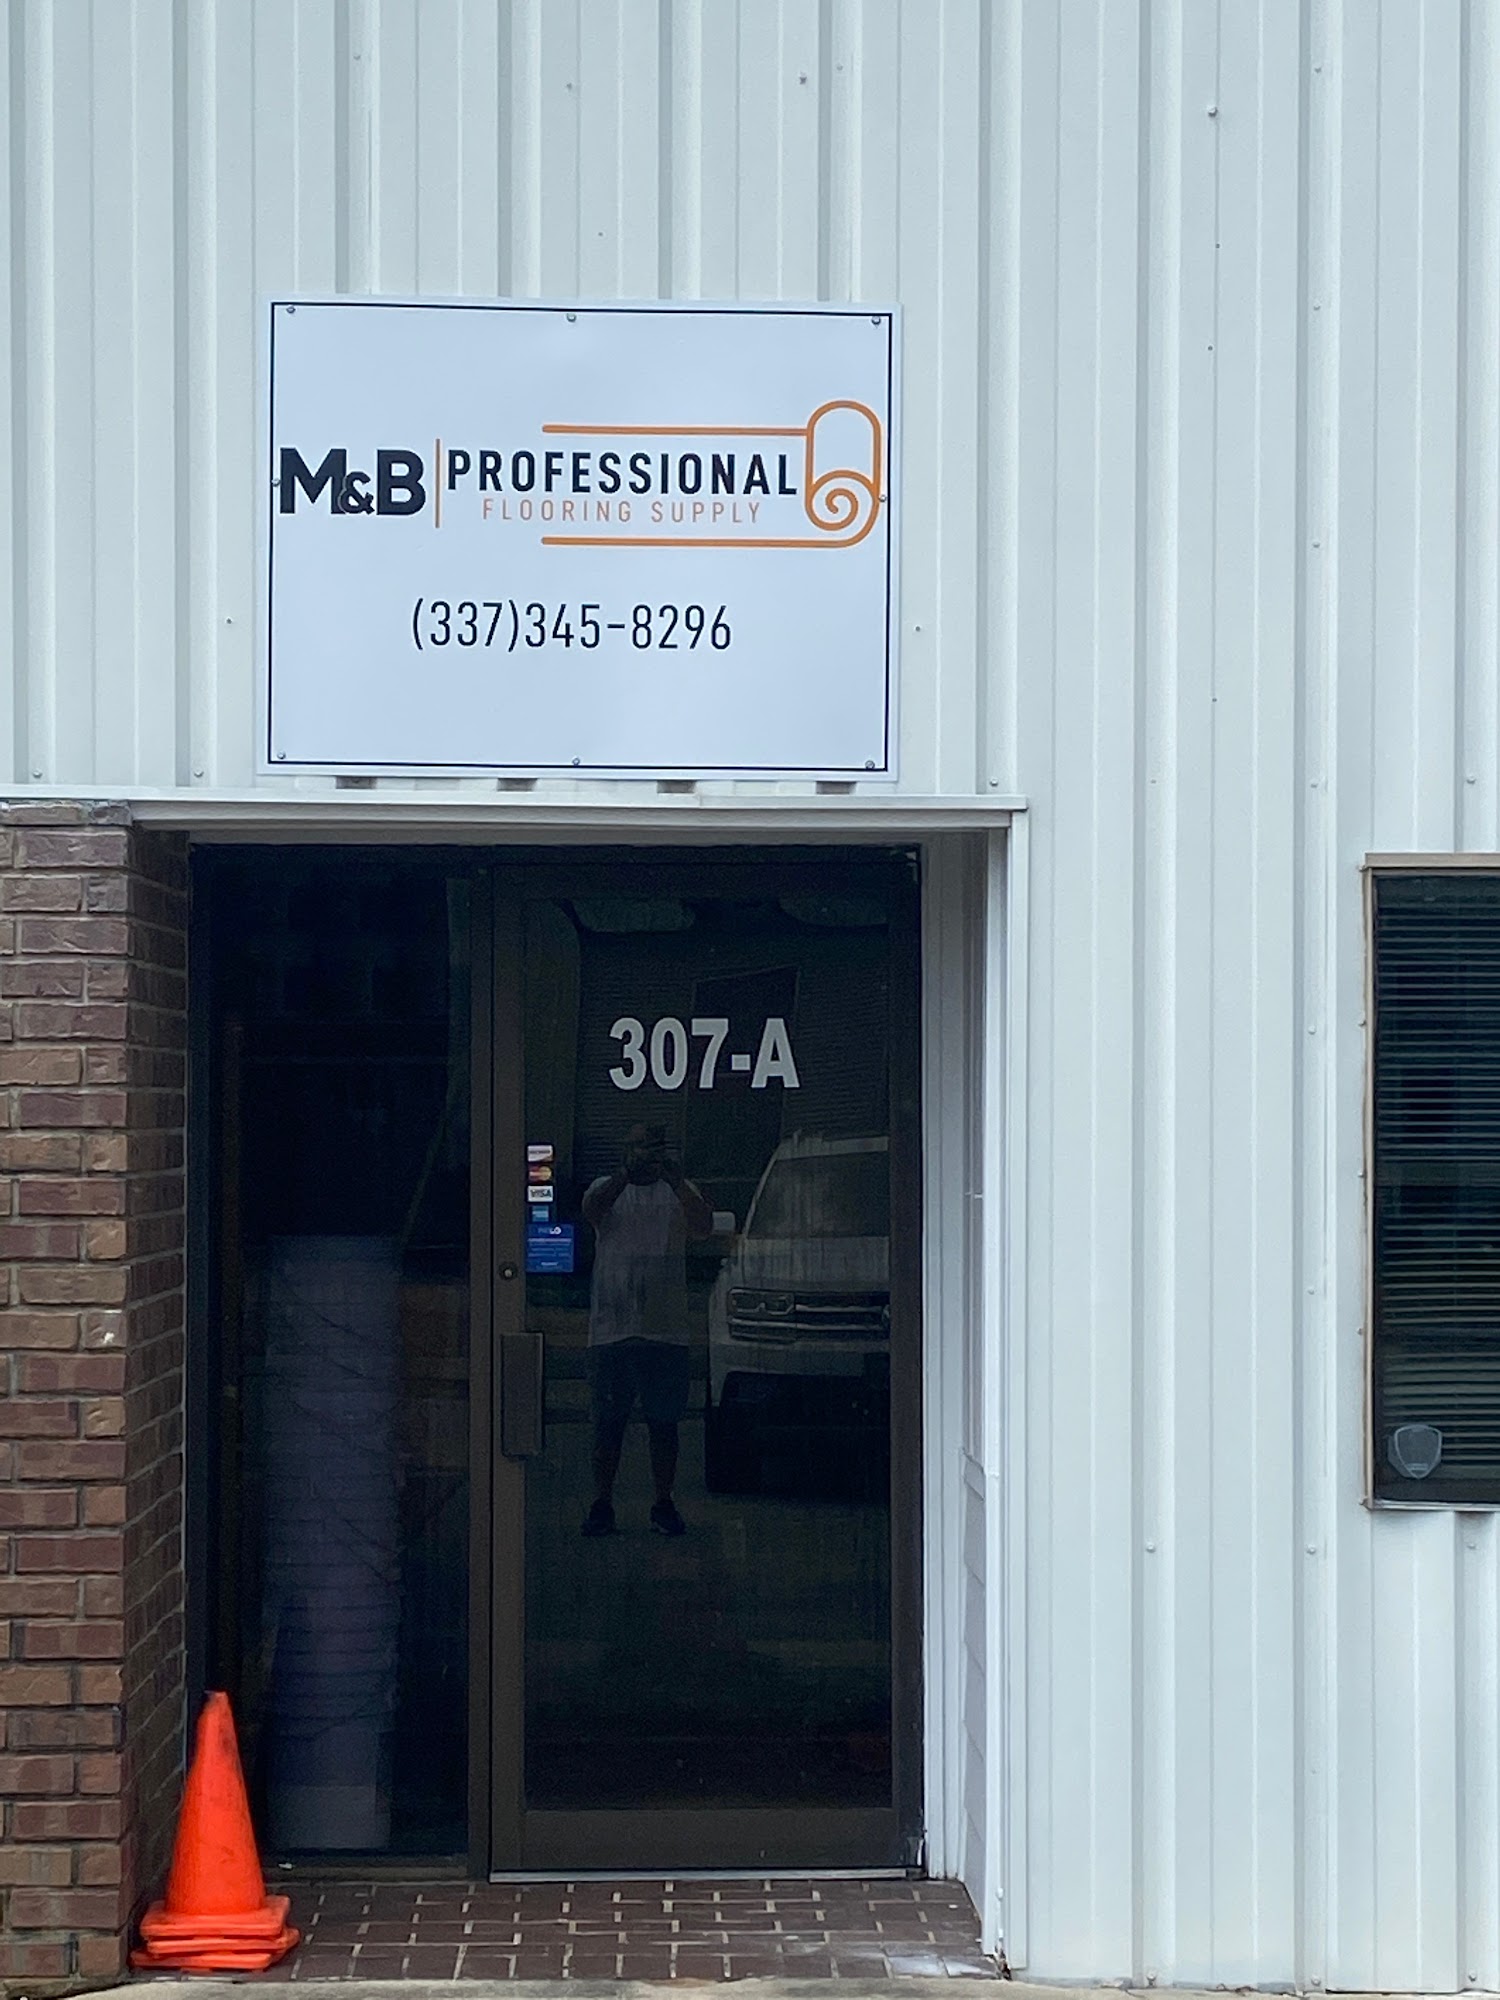 M&B Professional Flooring Supply LLC